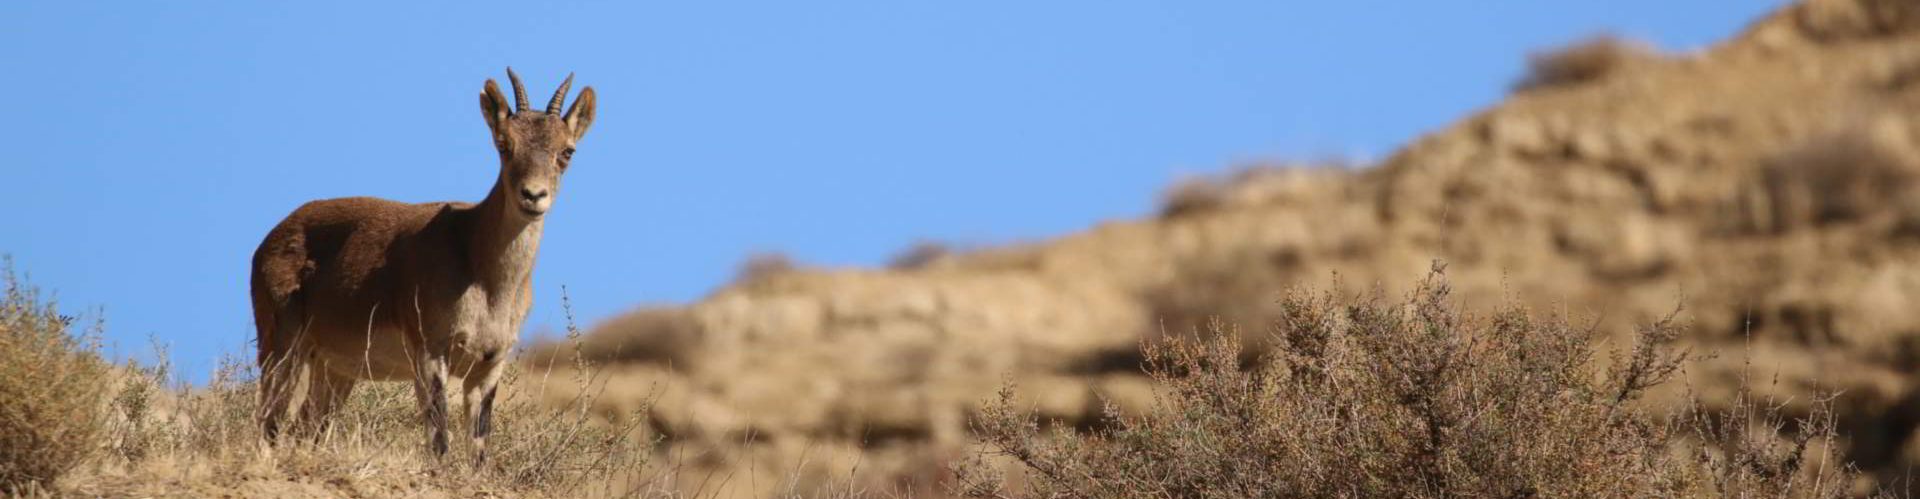 Spanish Ibex on a rocky hillside, Spain